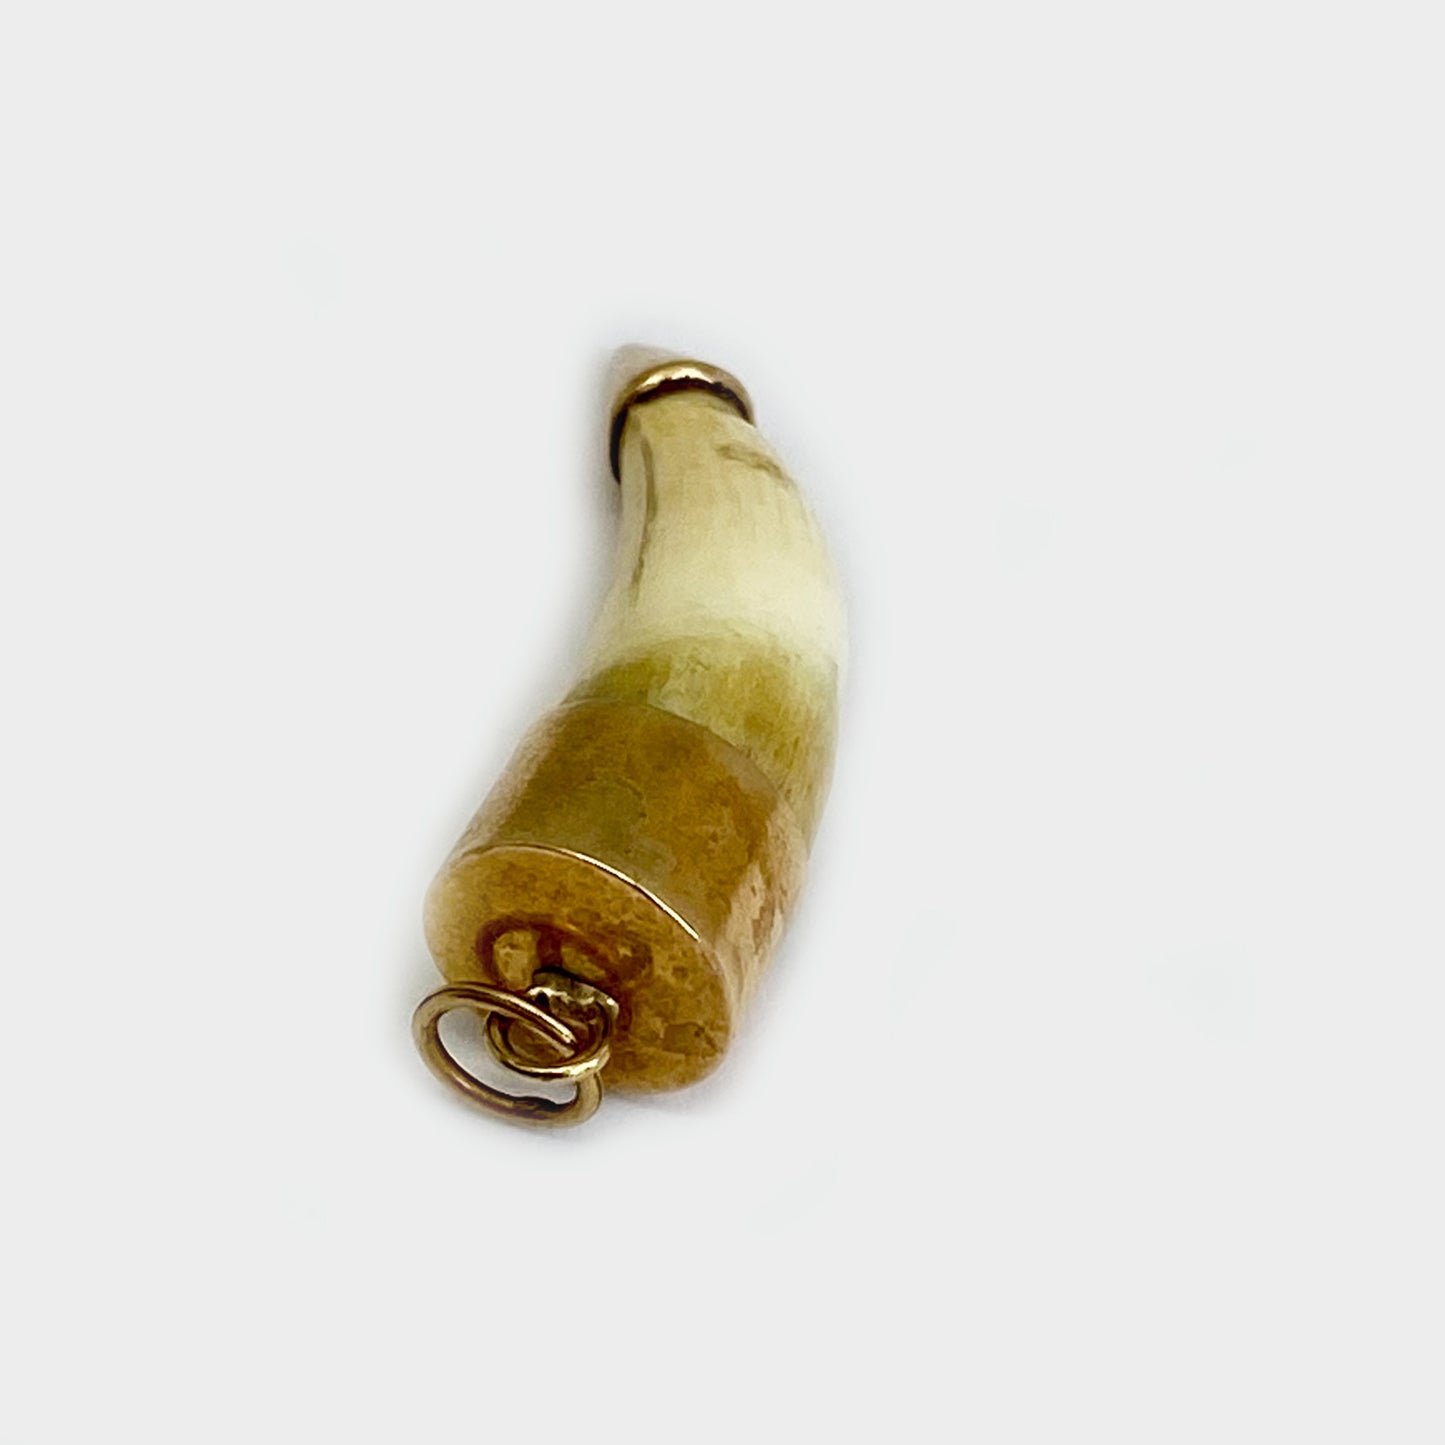 Antique 14k Gold Amulet Animal Tooth Pendant